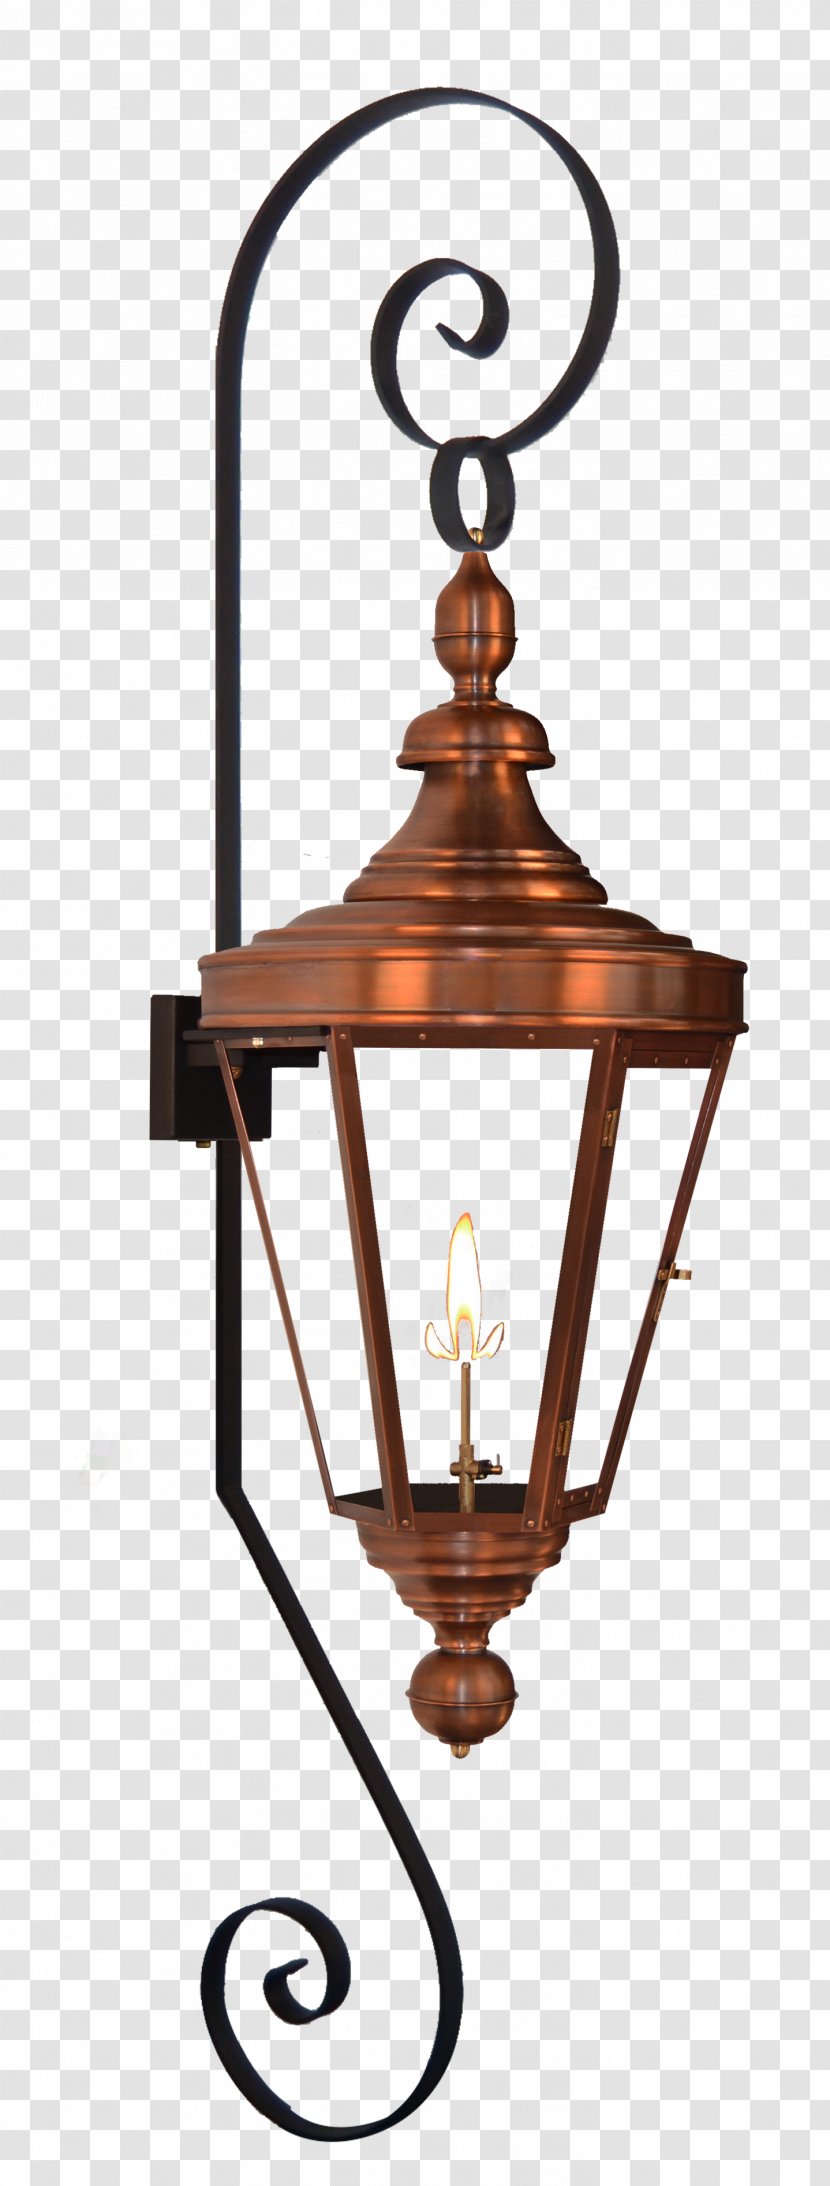 Lantern Light Fixture Gas Lighting Incandescent Bulb Transparent PNG